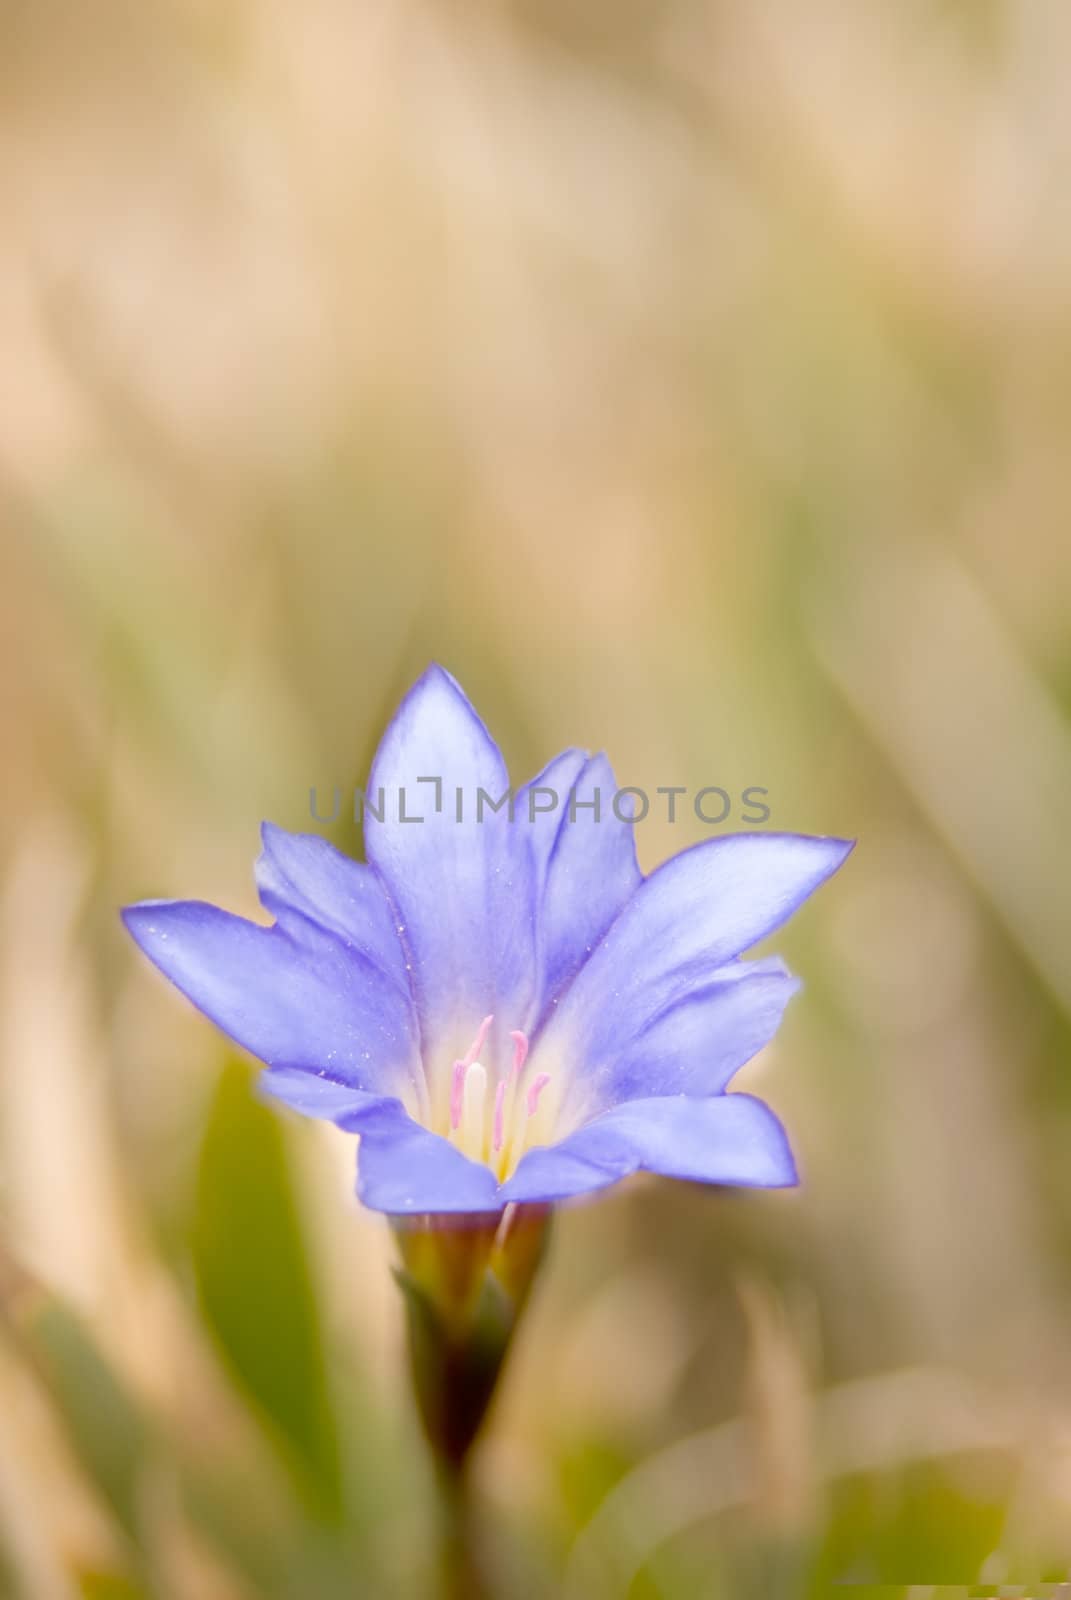 It is beautiful blue flower called Gentiana arisanensis Hayata.